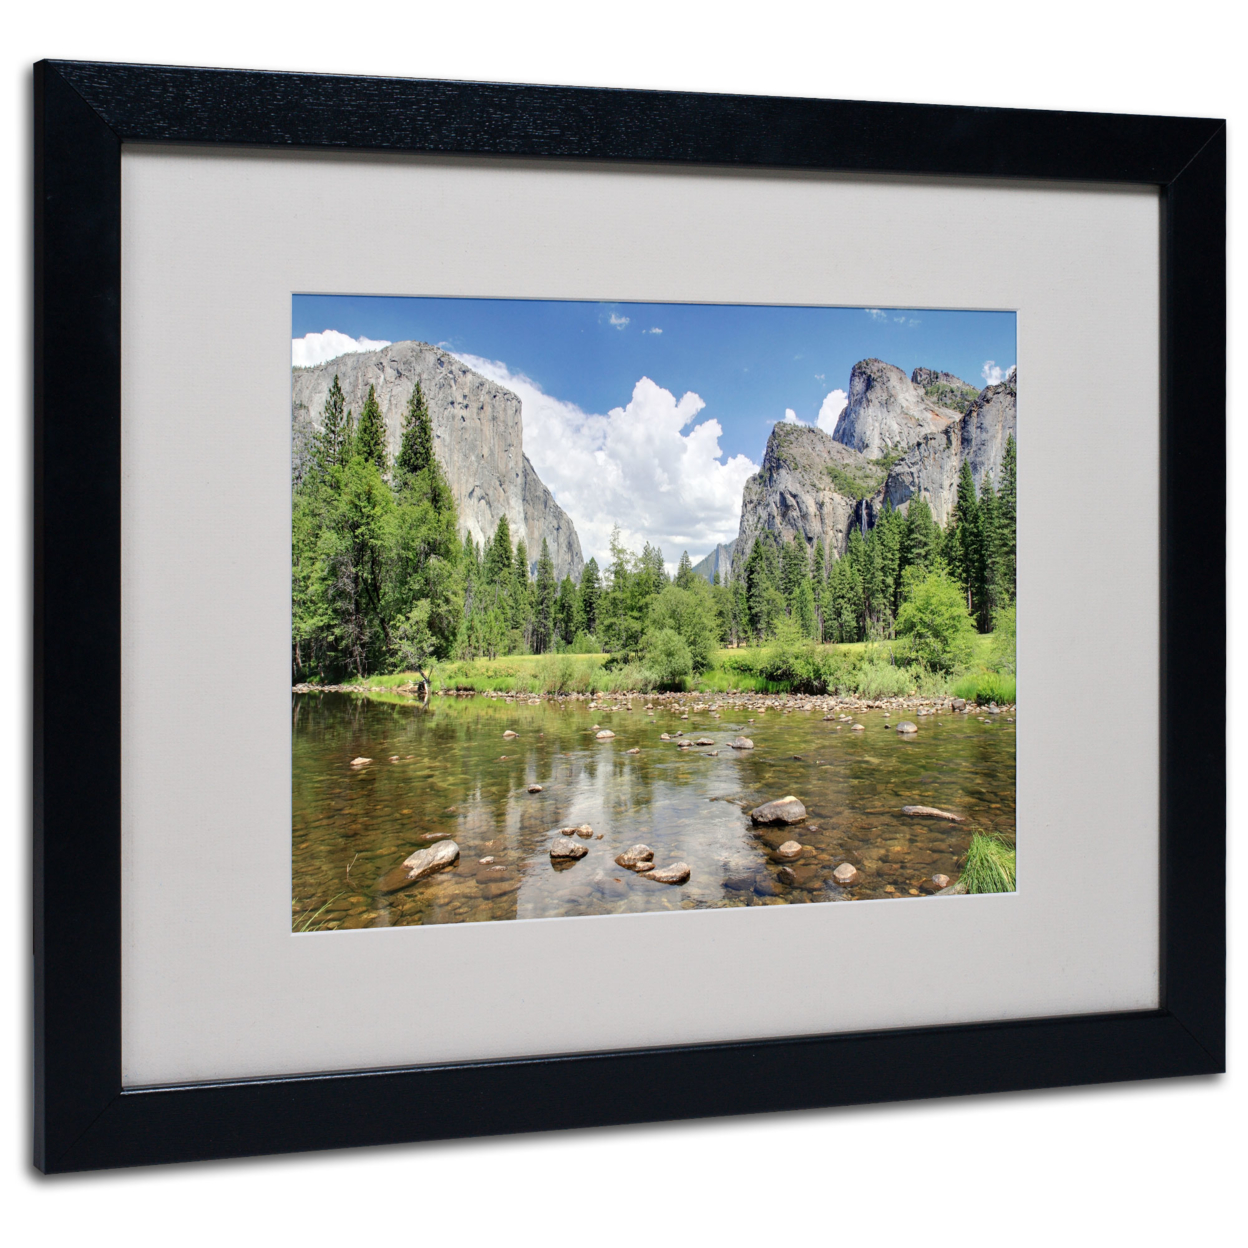 Pierre Leclerc 'Yosemite' Black Wooden Framed Art 18 X 22 Inches